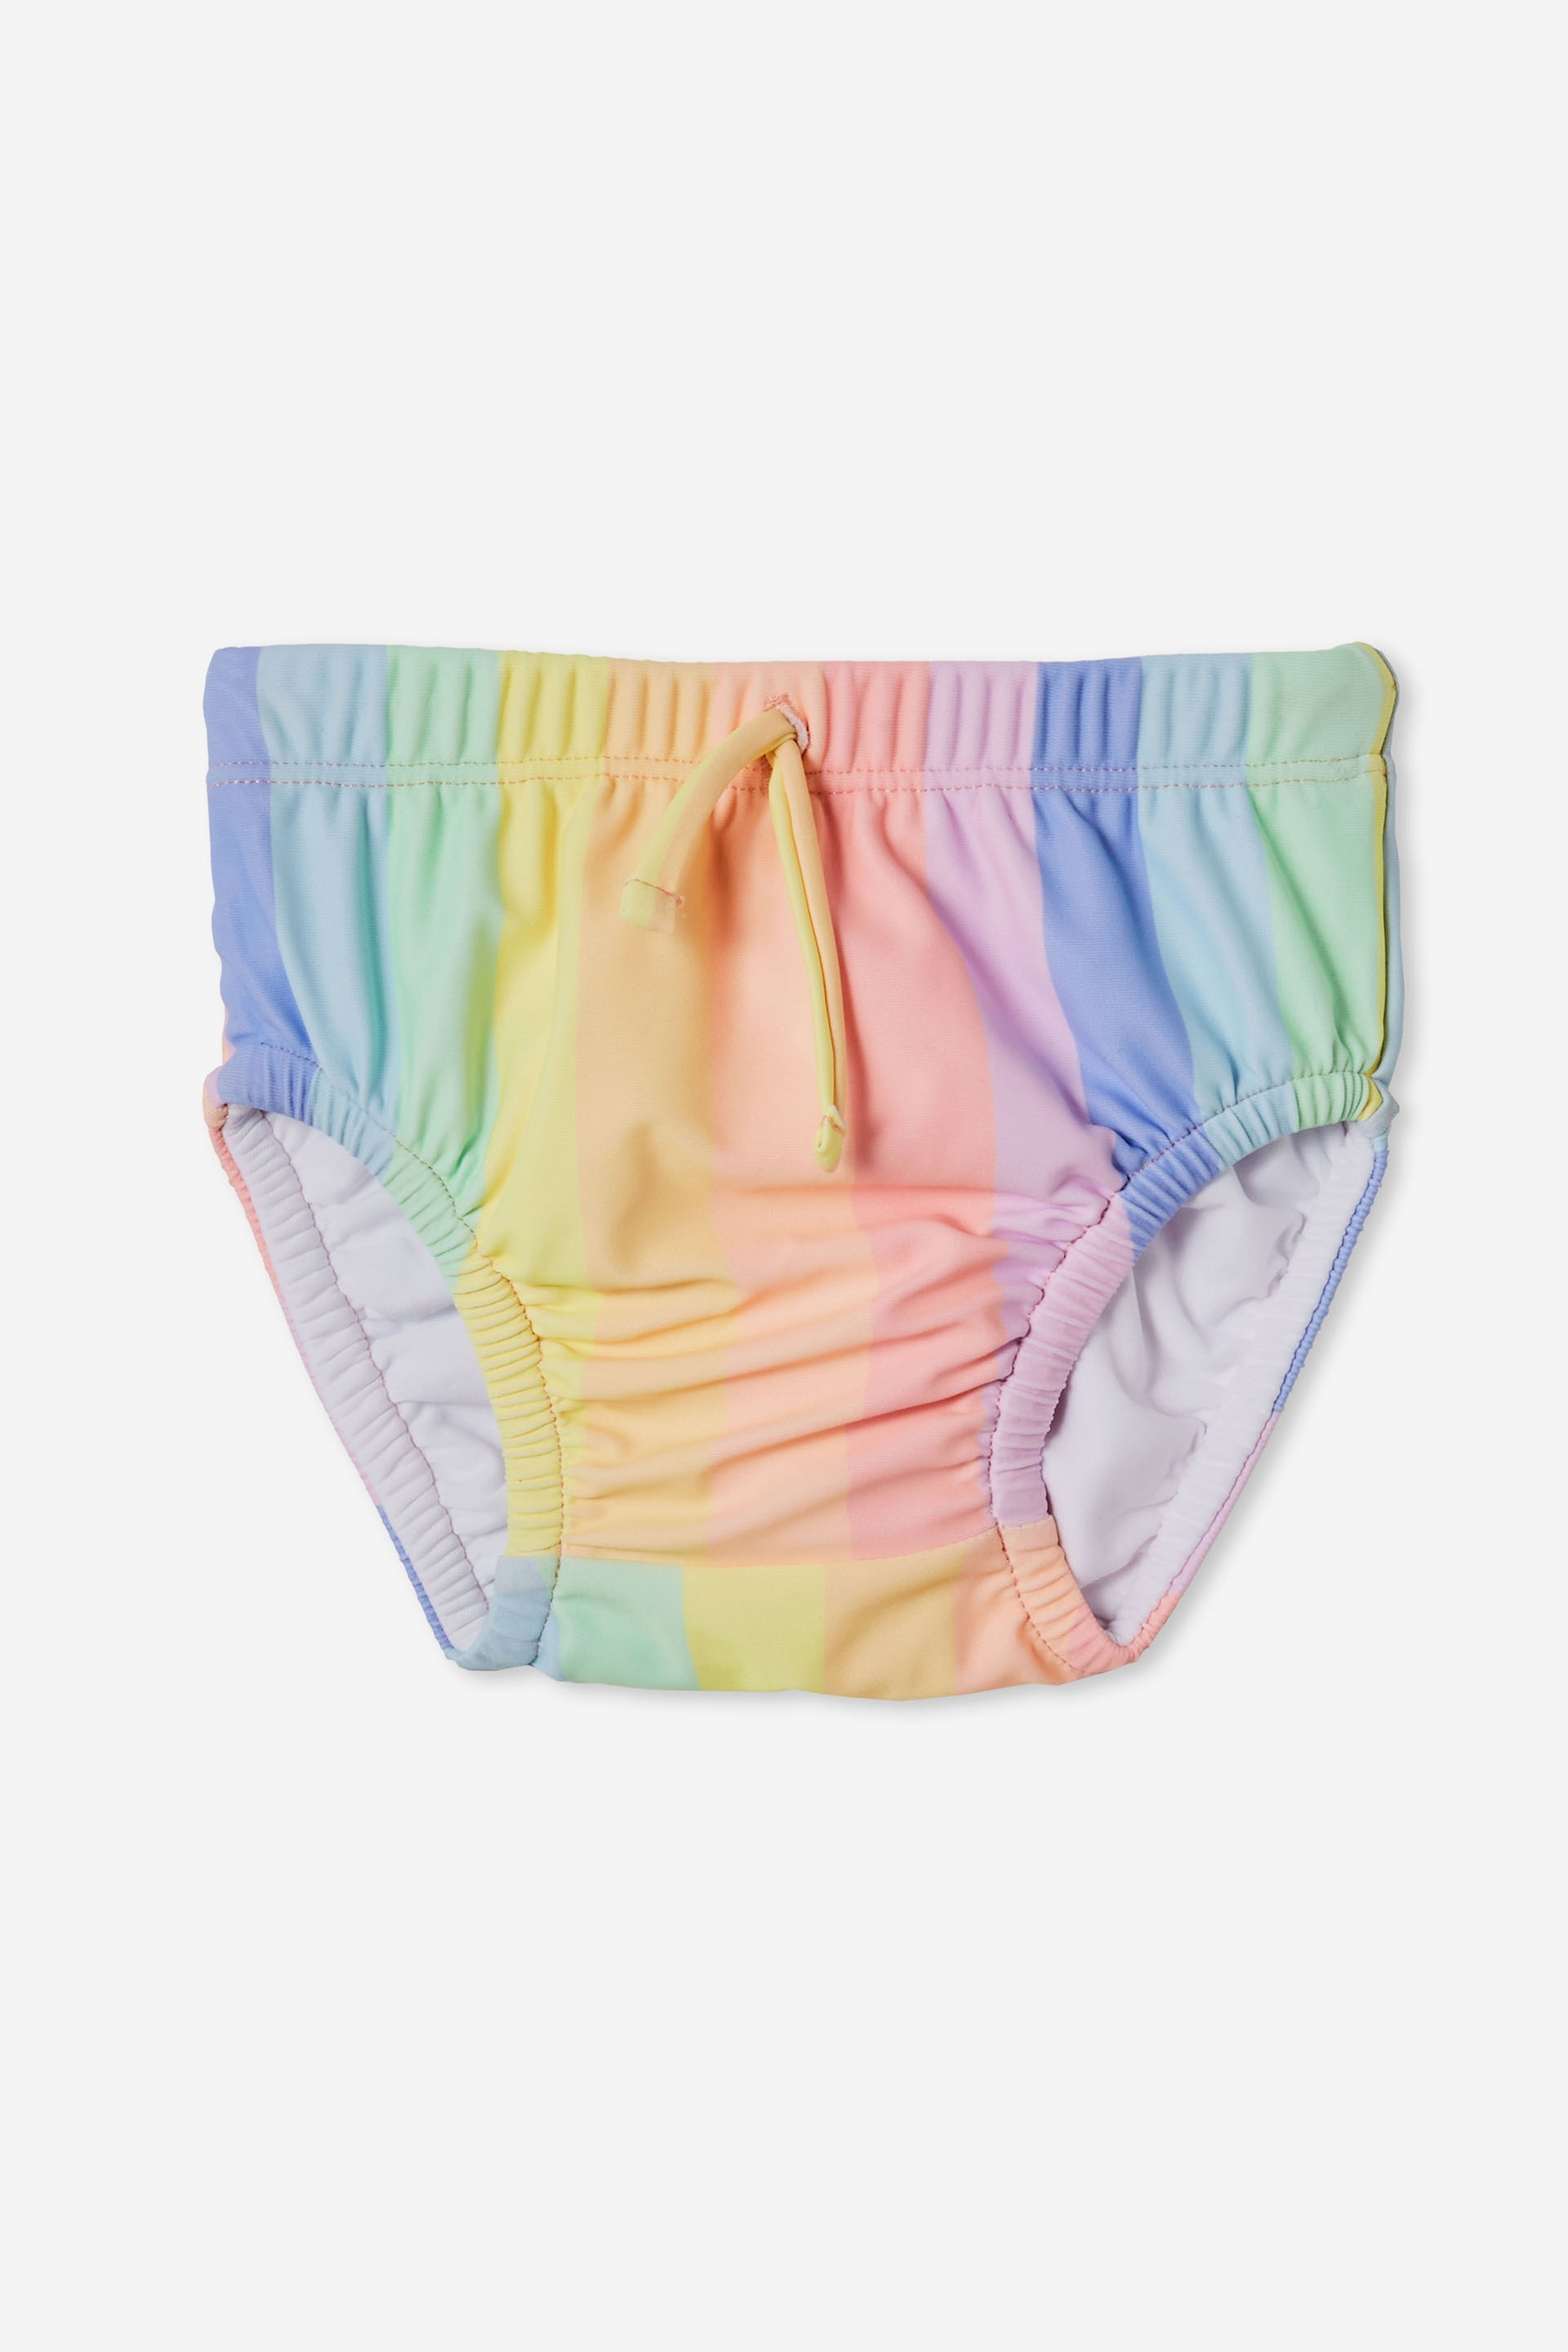 Cotton On Kids - Sidney Swim Nappy - Bondi rainbow stripe